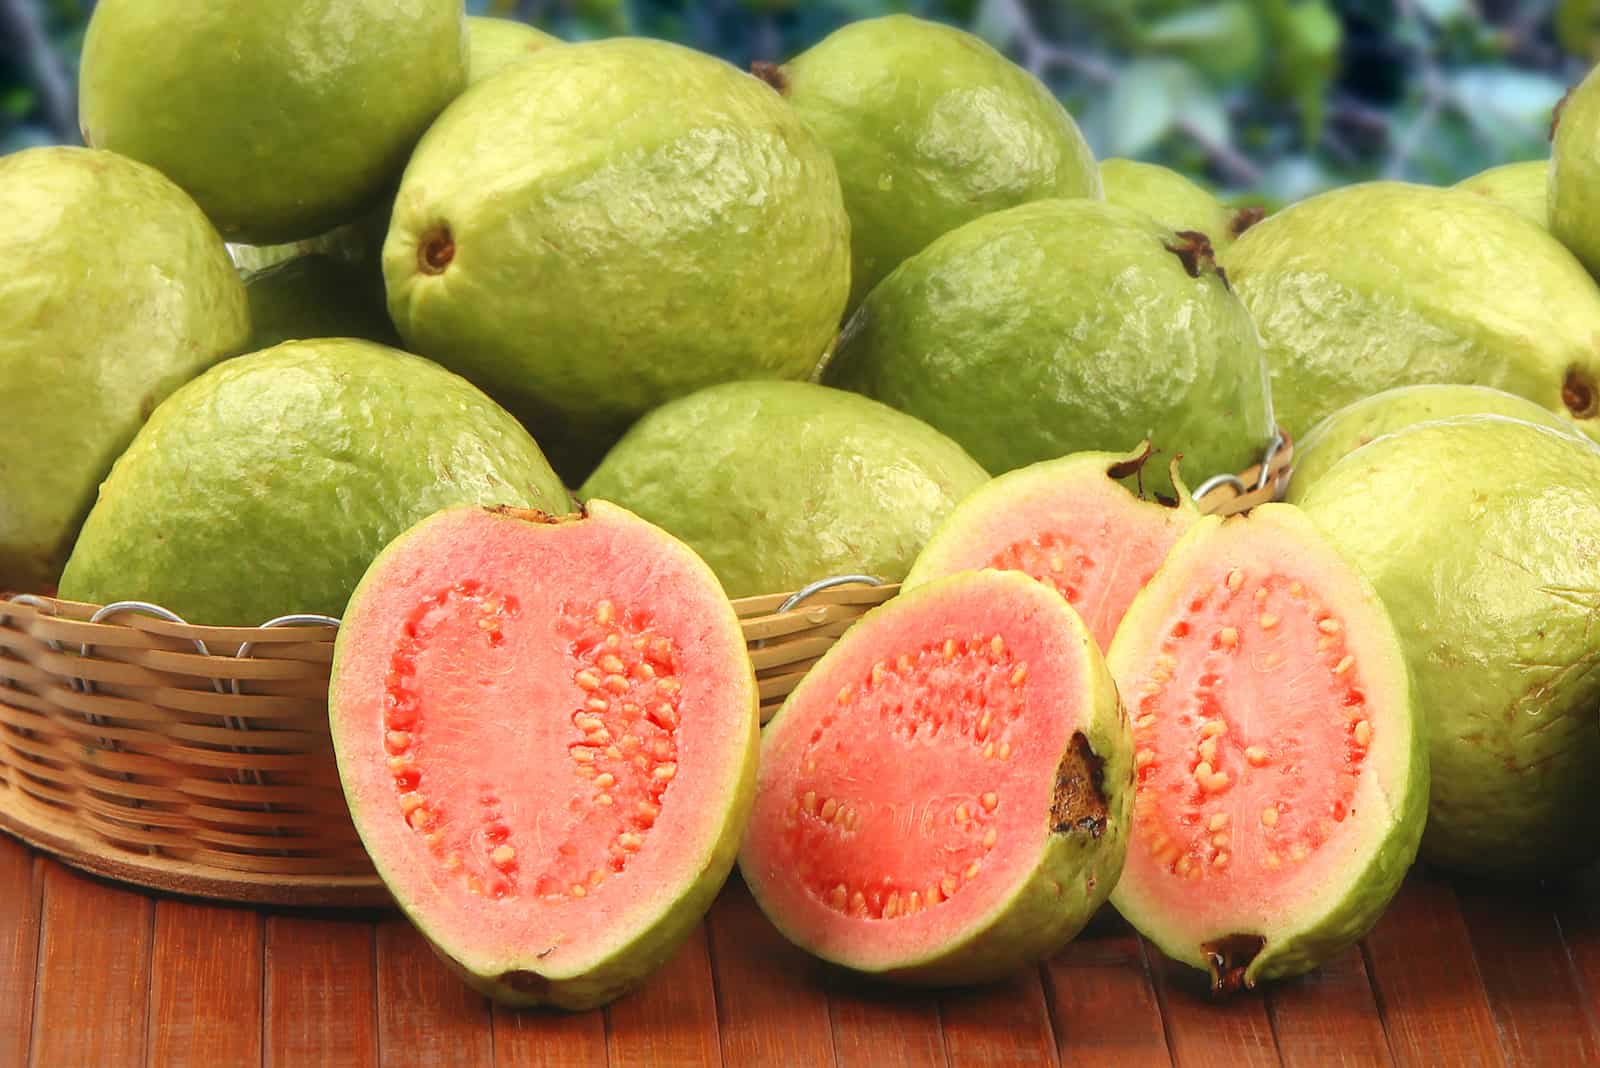 a basket full of fresh guavas